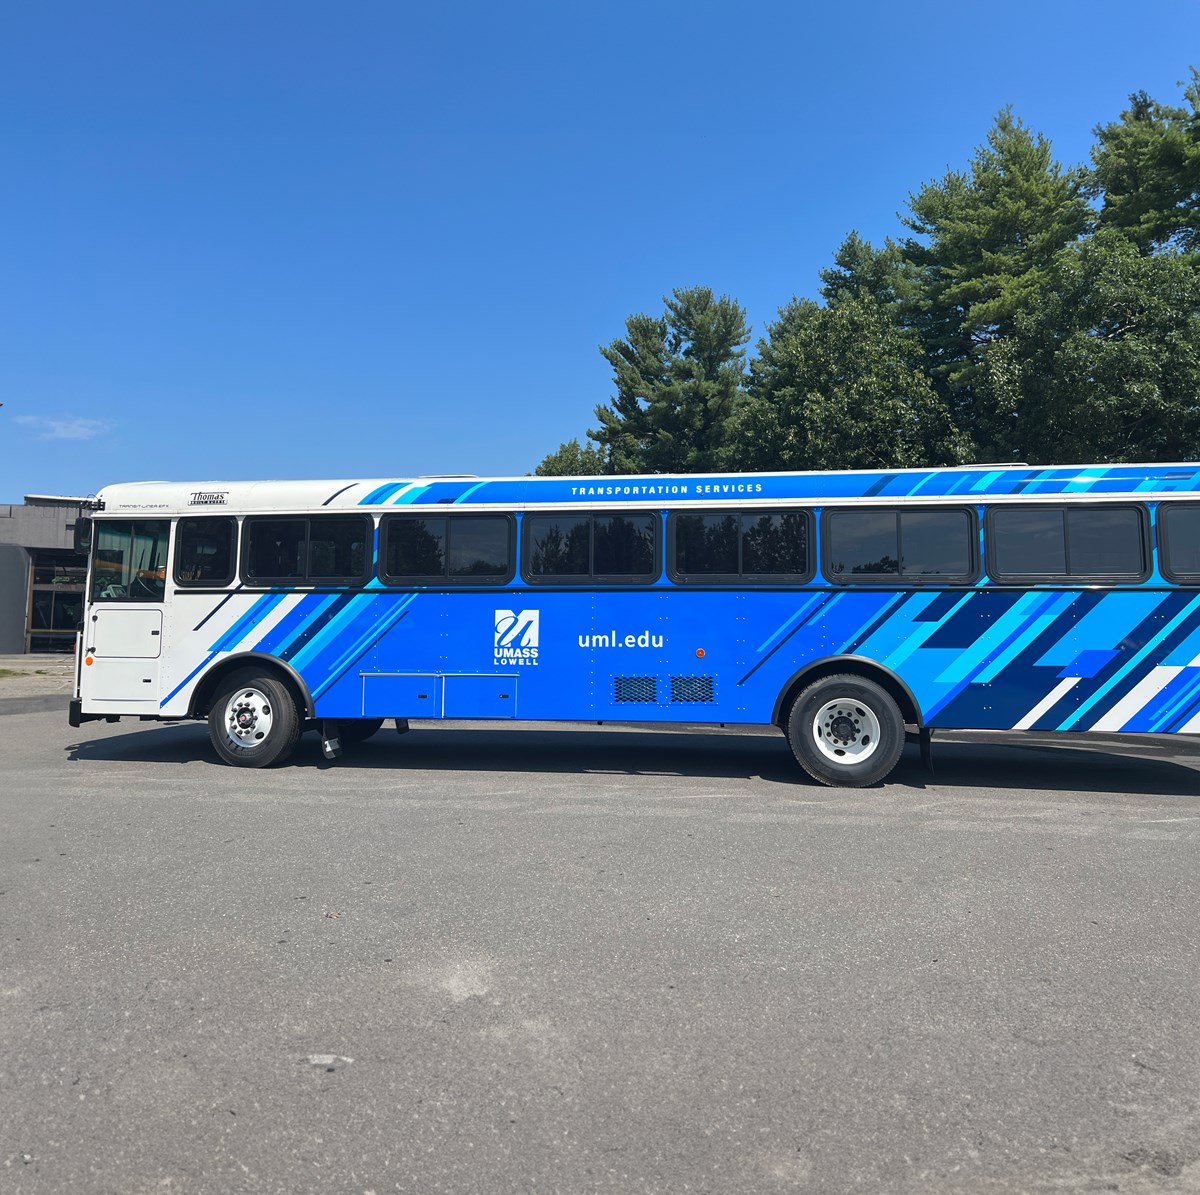 A big blue UMass Lowell branded bus